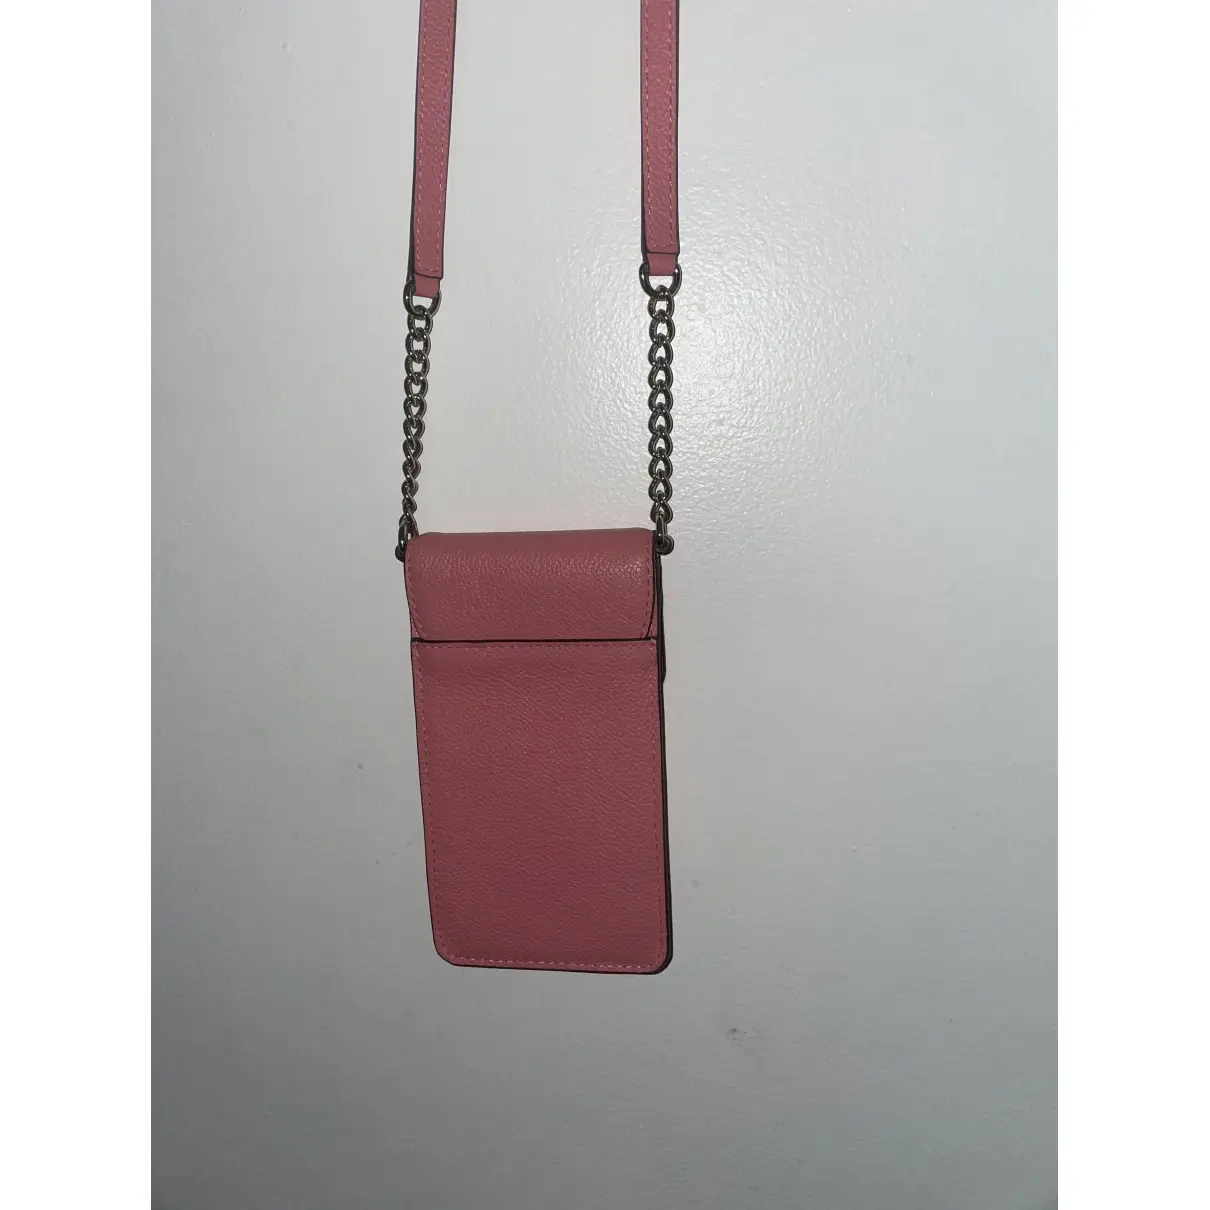 Buy Kate Spade Leather crossbody bag online